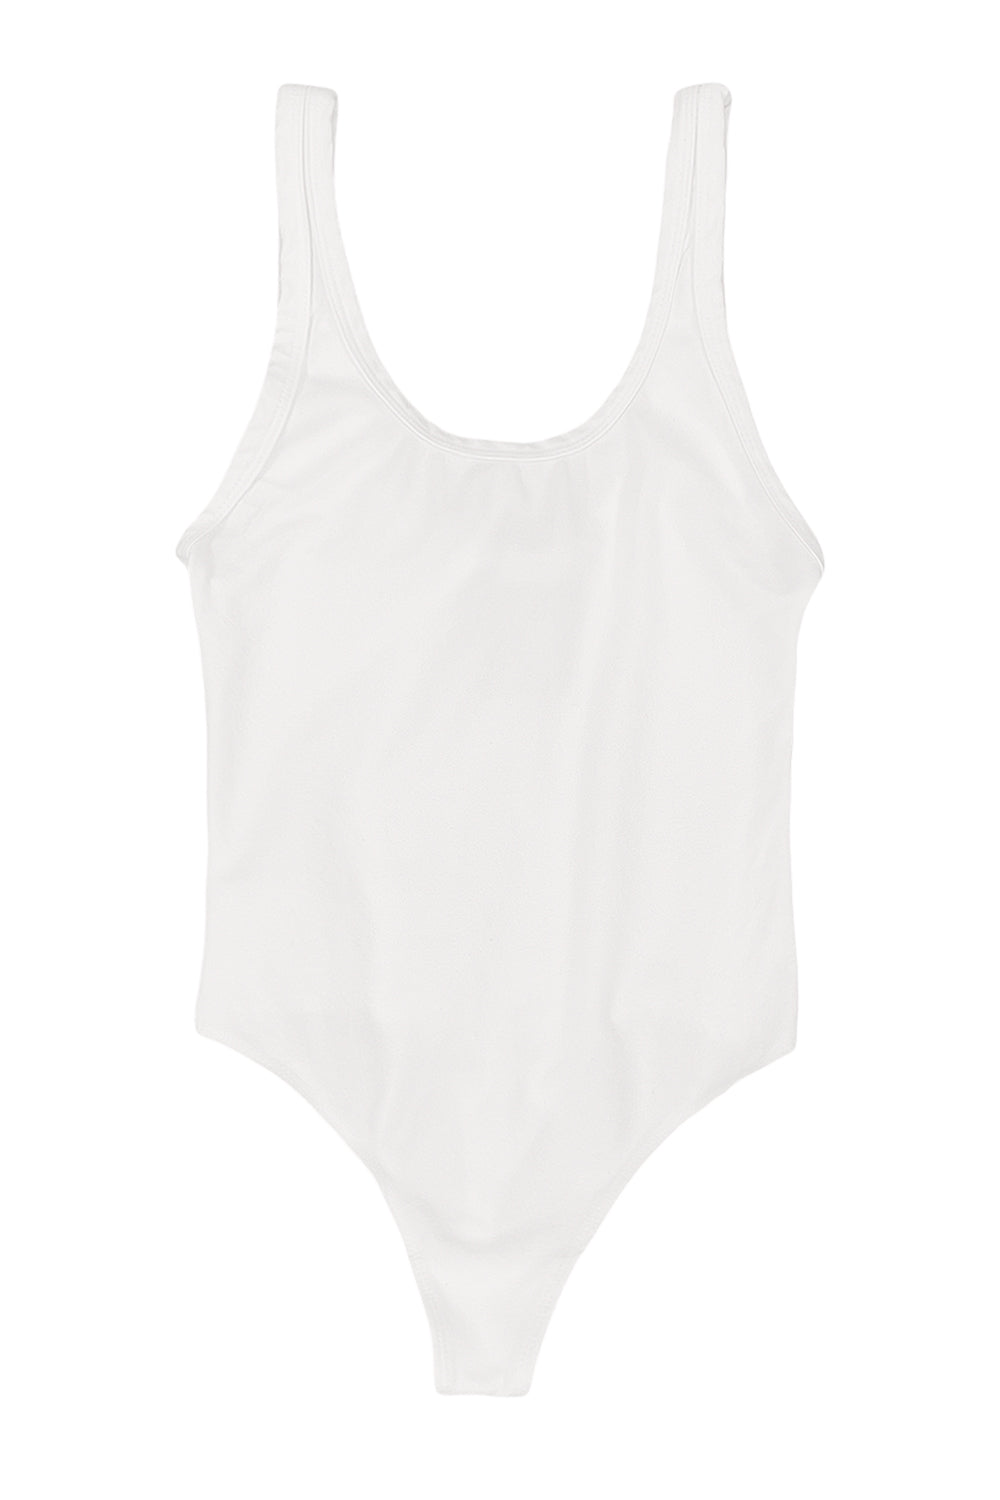 Bodysuit | Jungmaven Hemp Clothing & Accessories / Color: Washed White